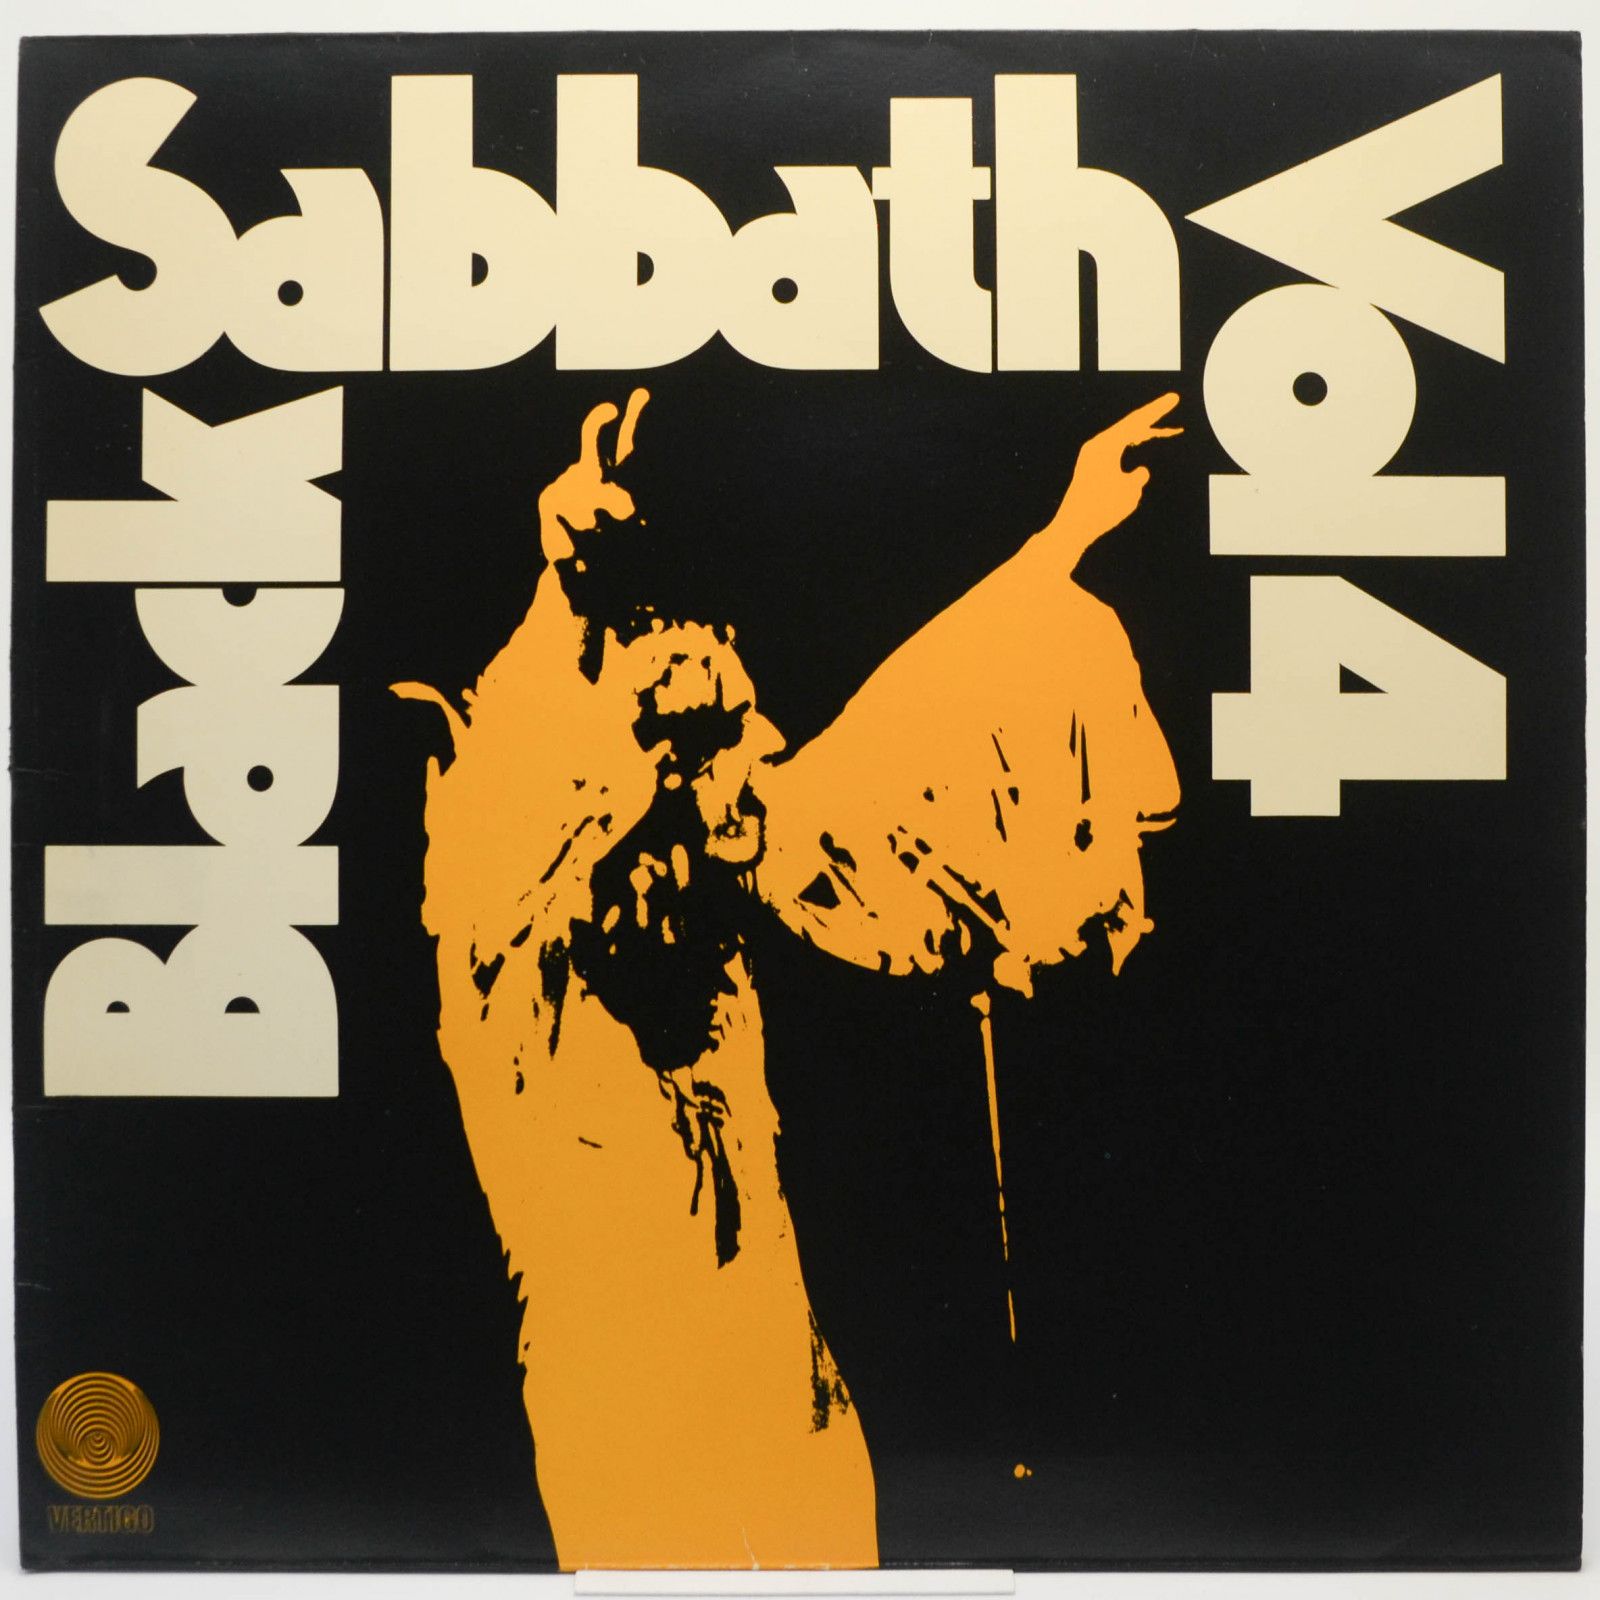 Black sabbath vol 4. Black Sabbath LP. Черный шабаш пластинки. Black Sabbath Vol 4 обложка.